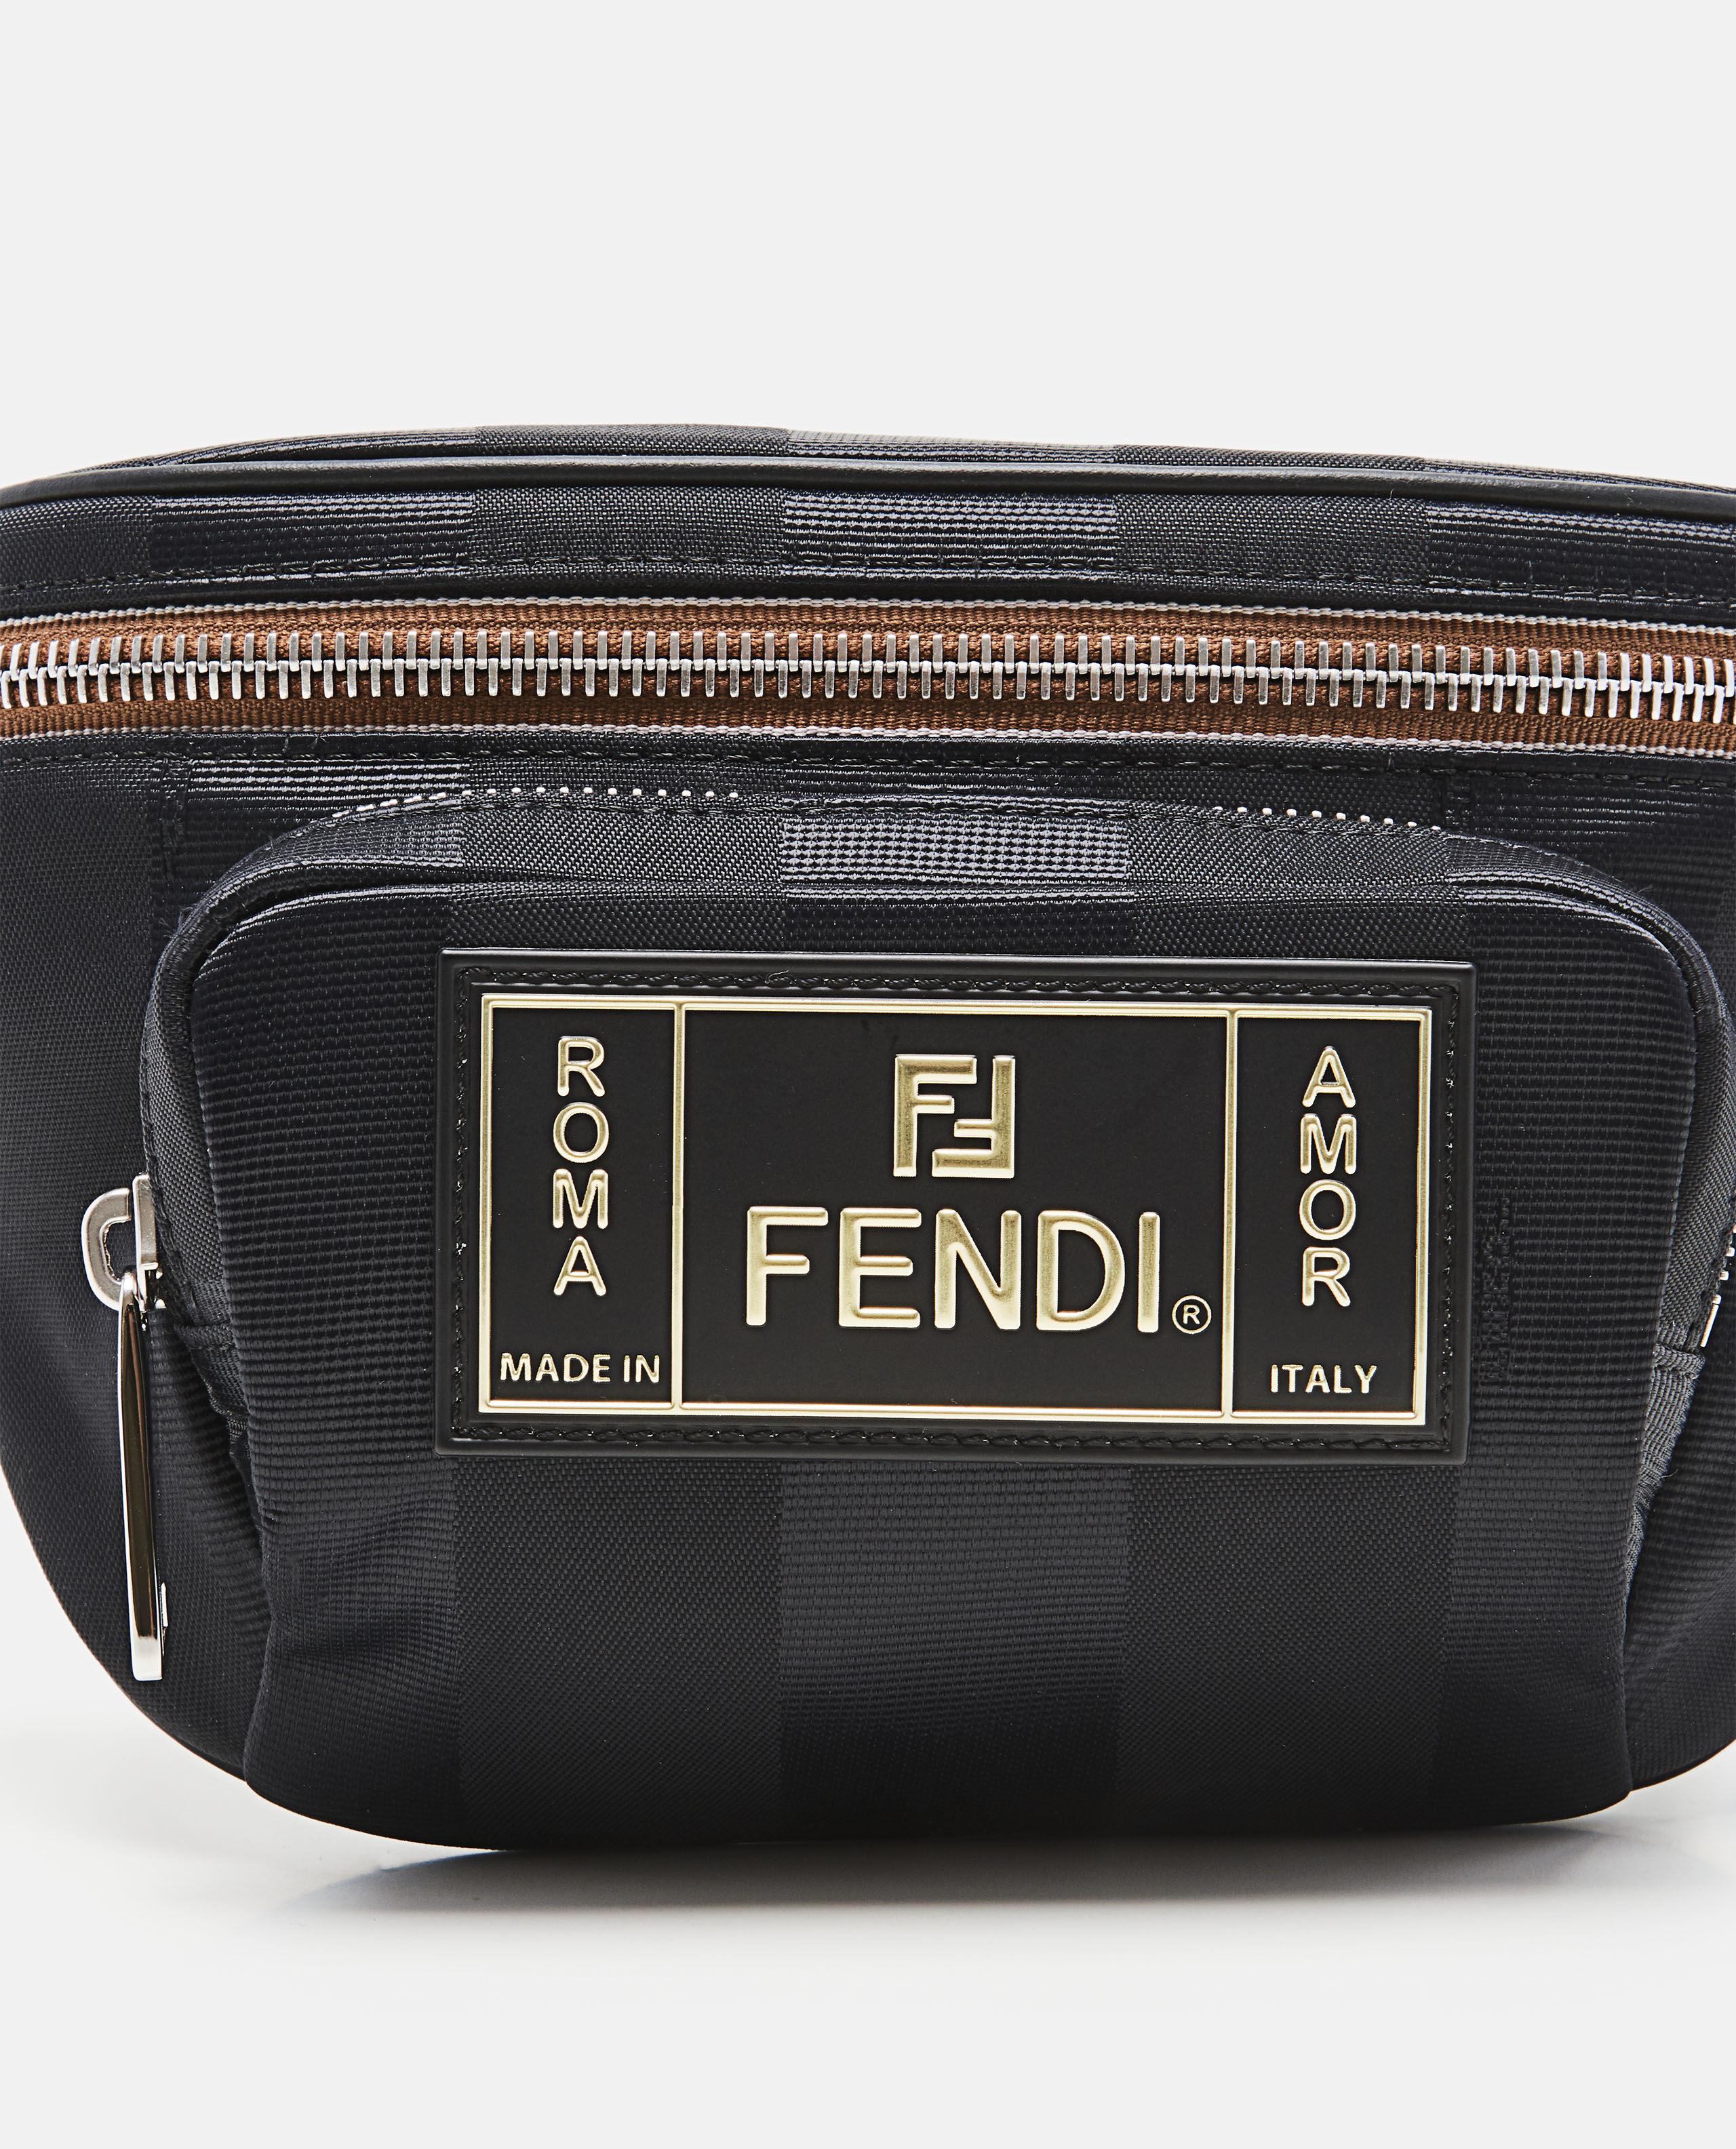 Fendi Waist Bag With Ff Rome Print in Black for Men - Lyst